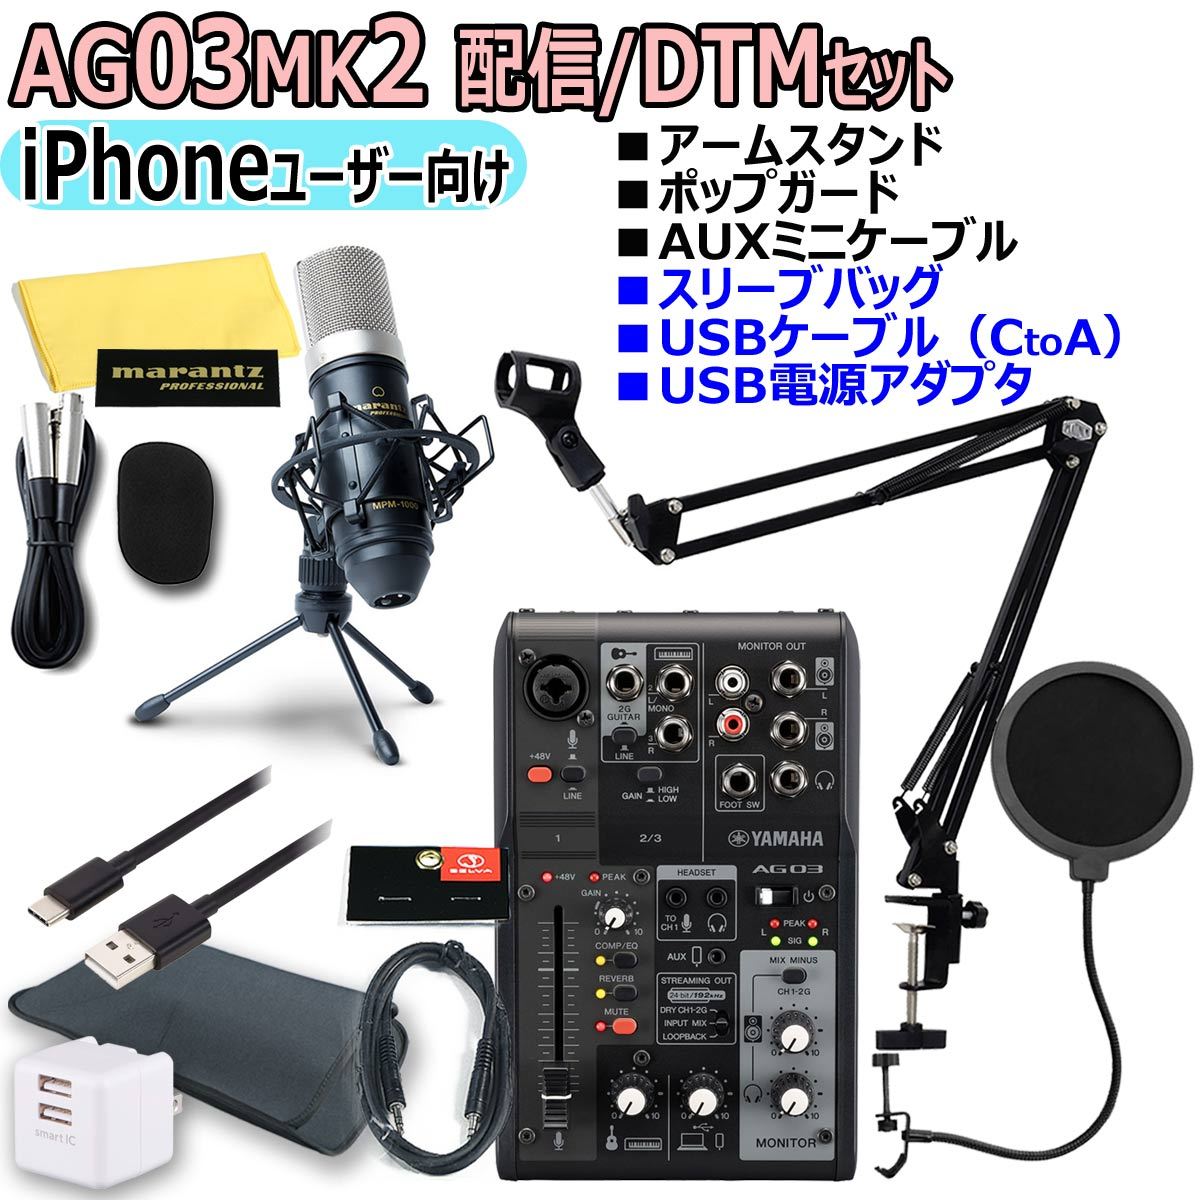 YAMAHA AG03MK2 BLACK iPhoneユーザー向け 配信/DTMセット【WEBSHOP